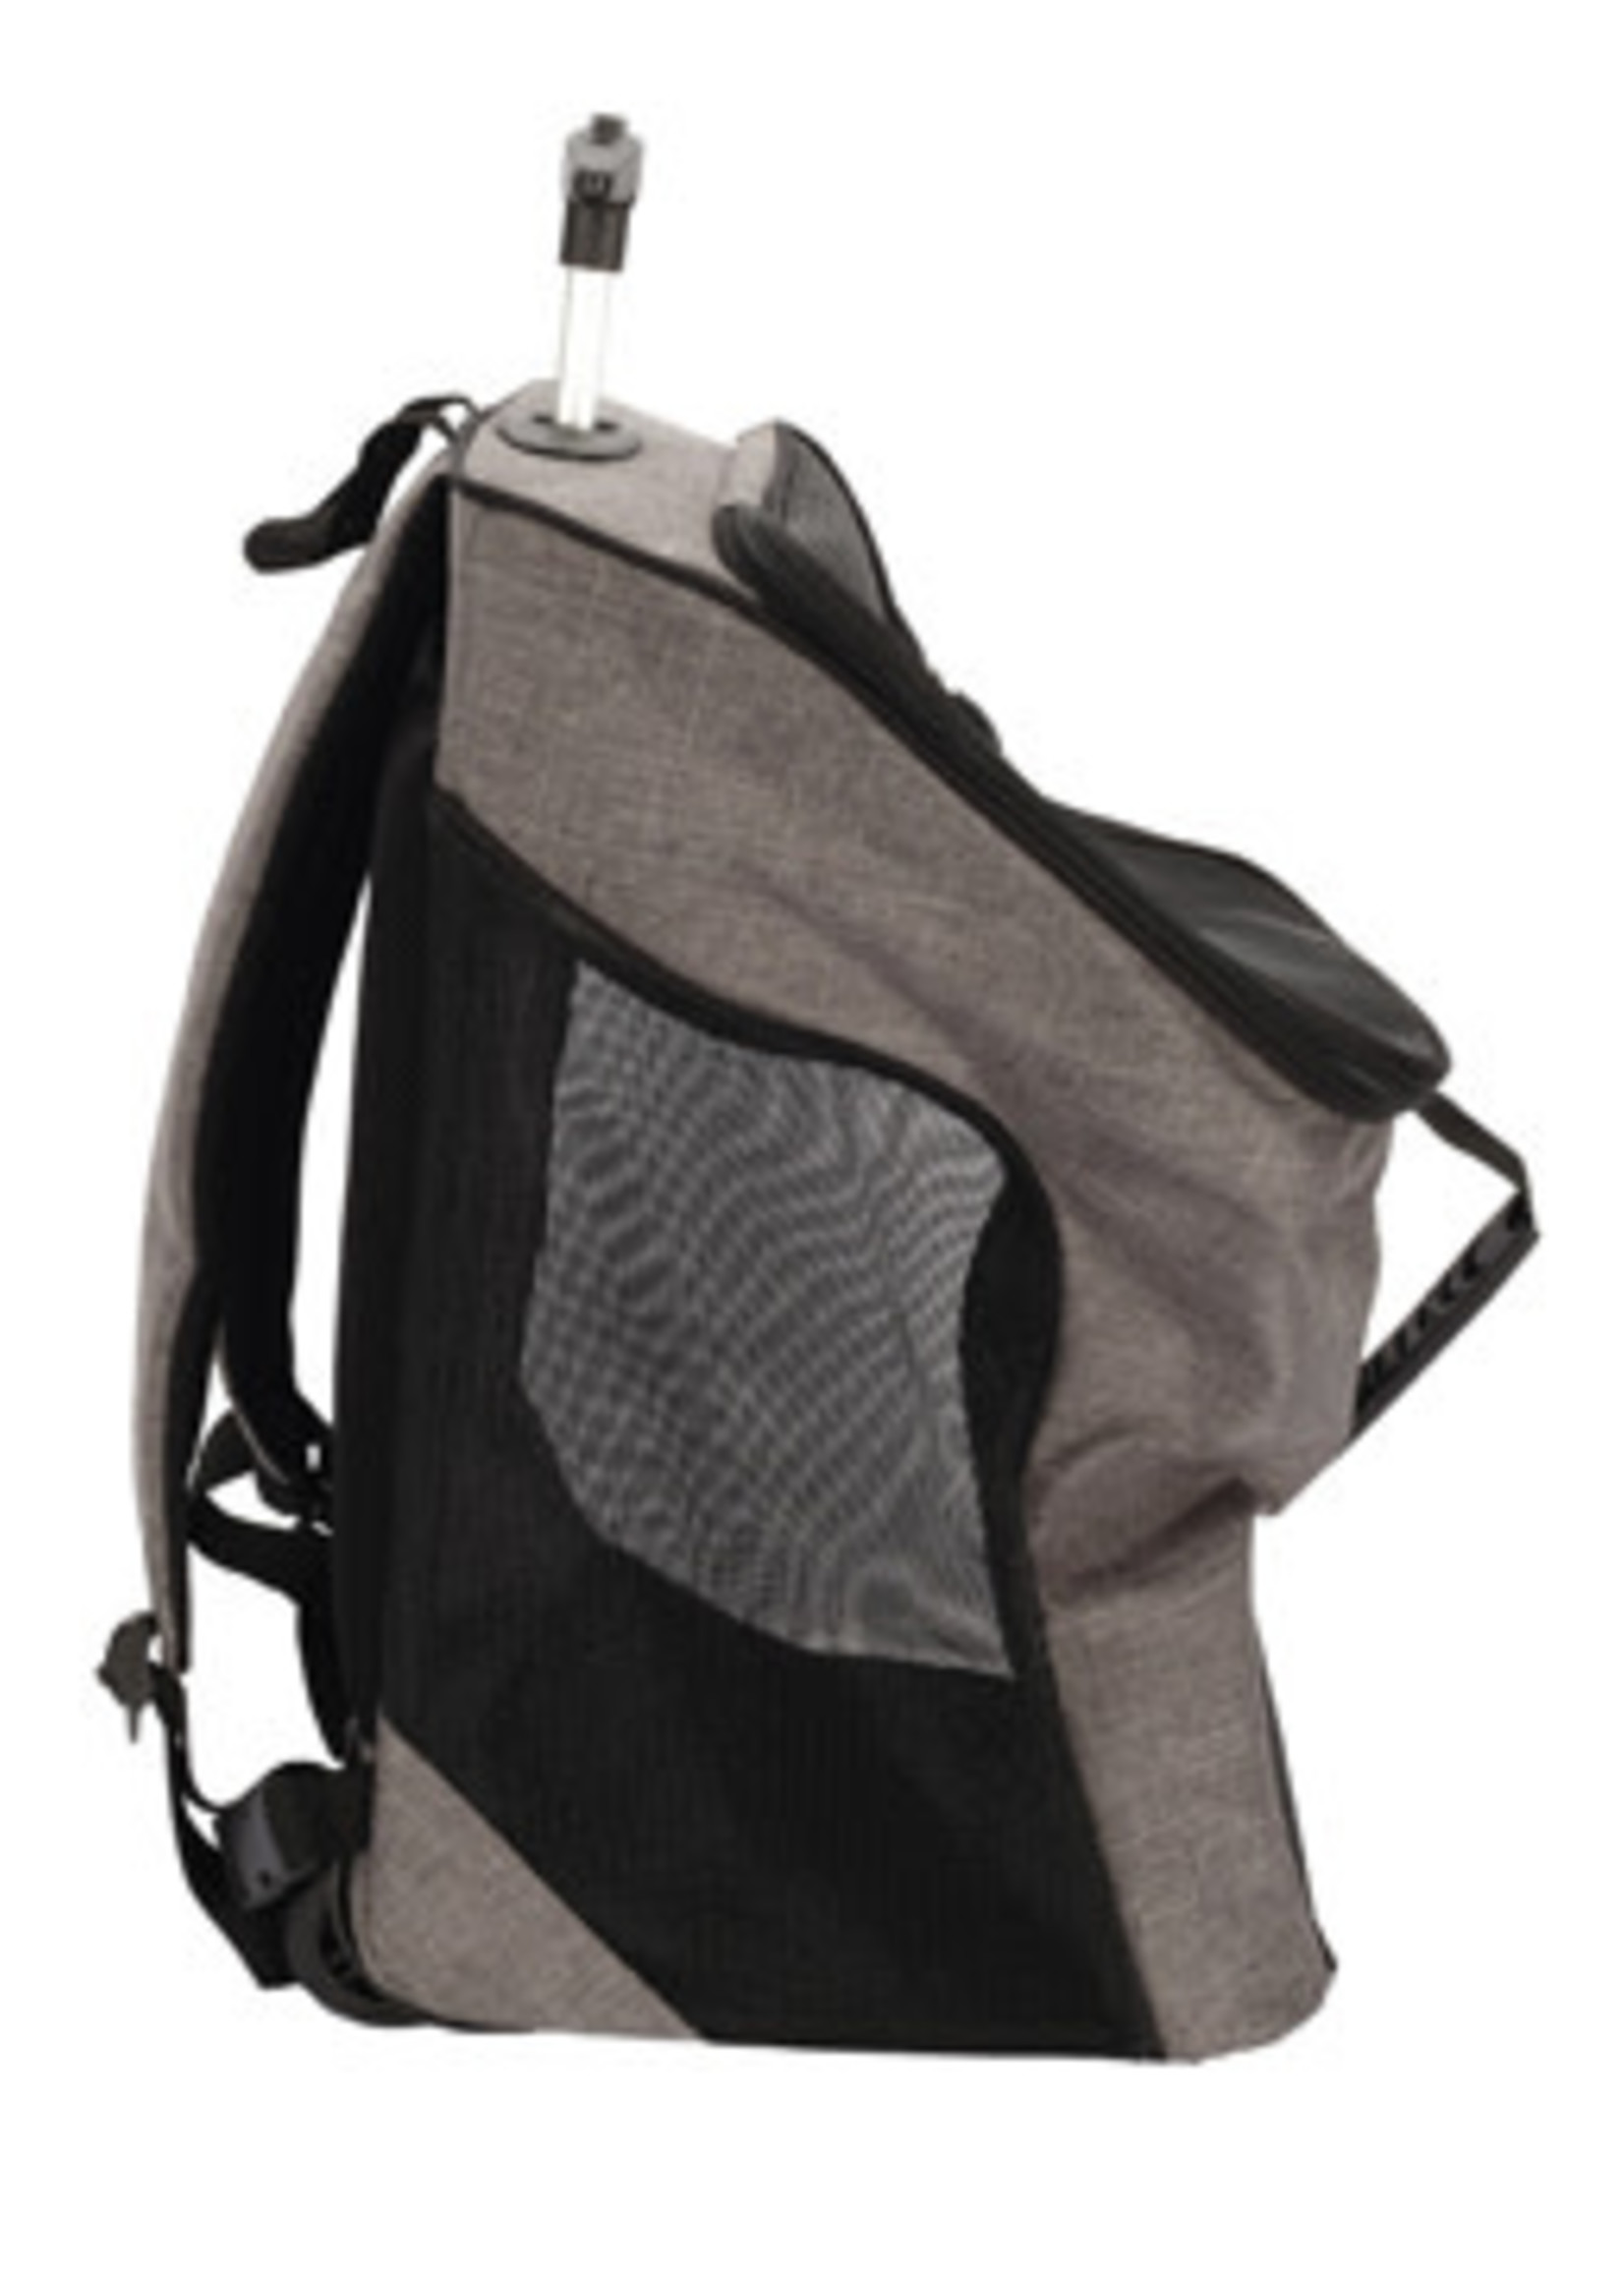 Dogit® Dogit® Explorer Soft Carrier 2-in-1 Wheeled Carrier/Backpack